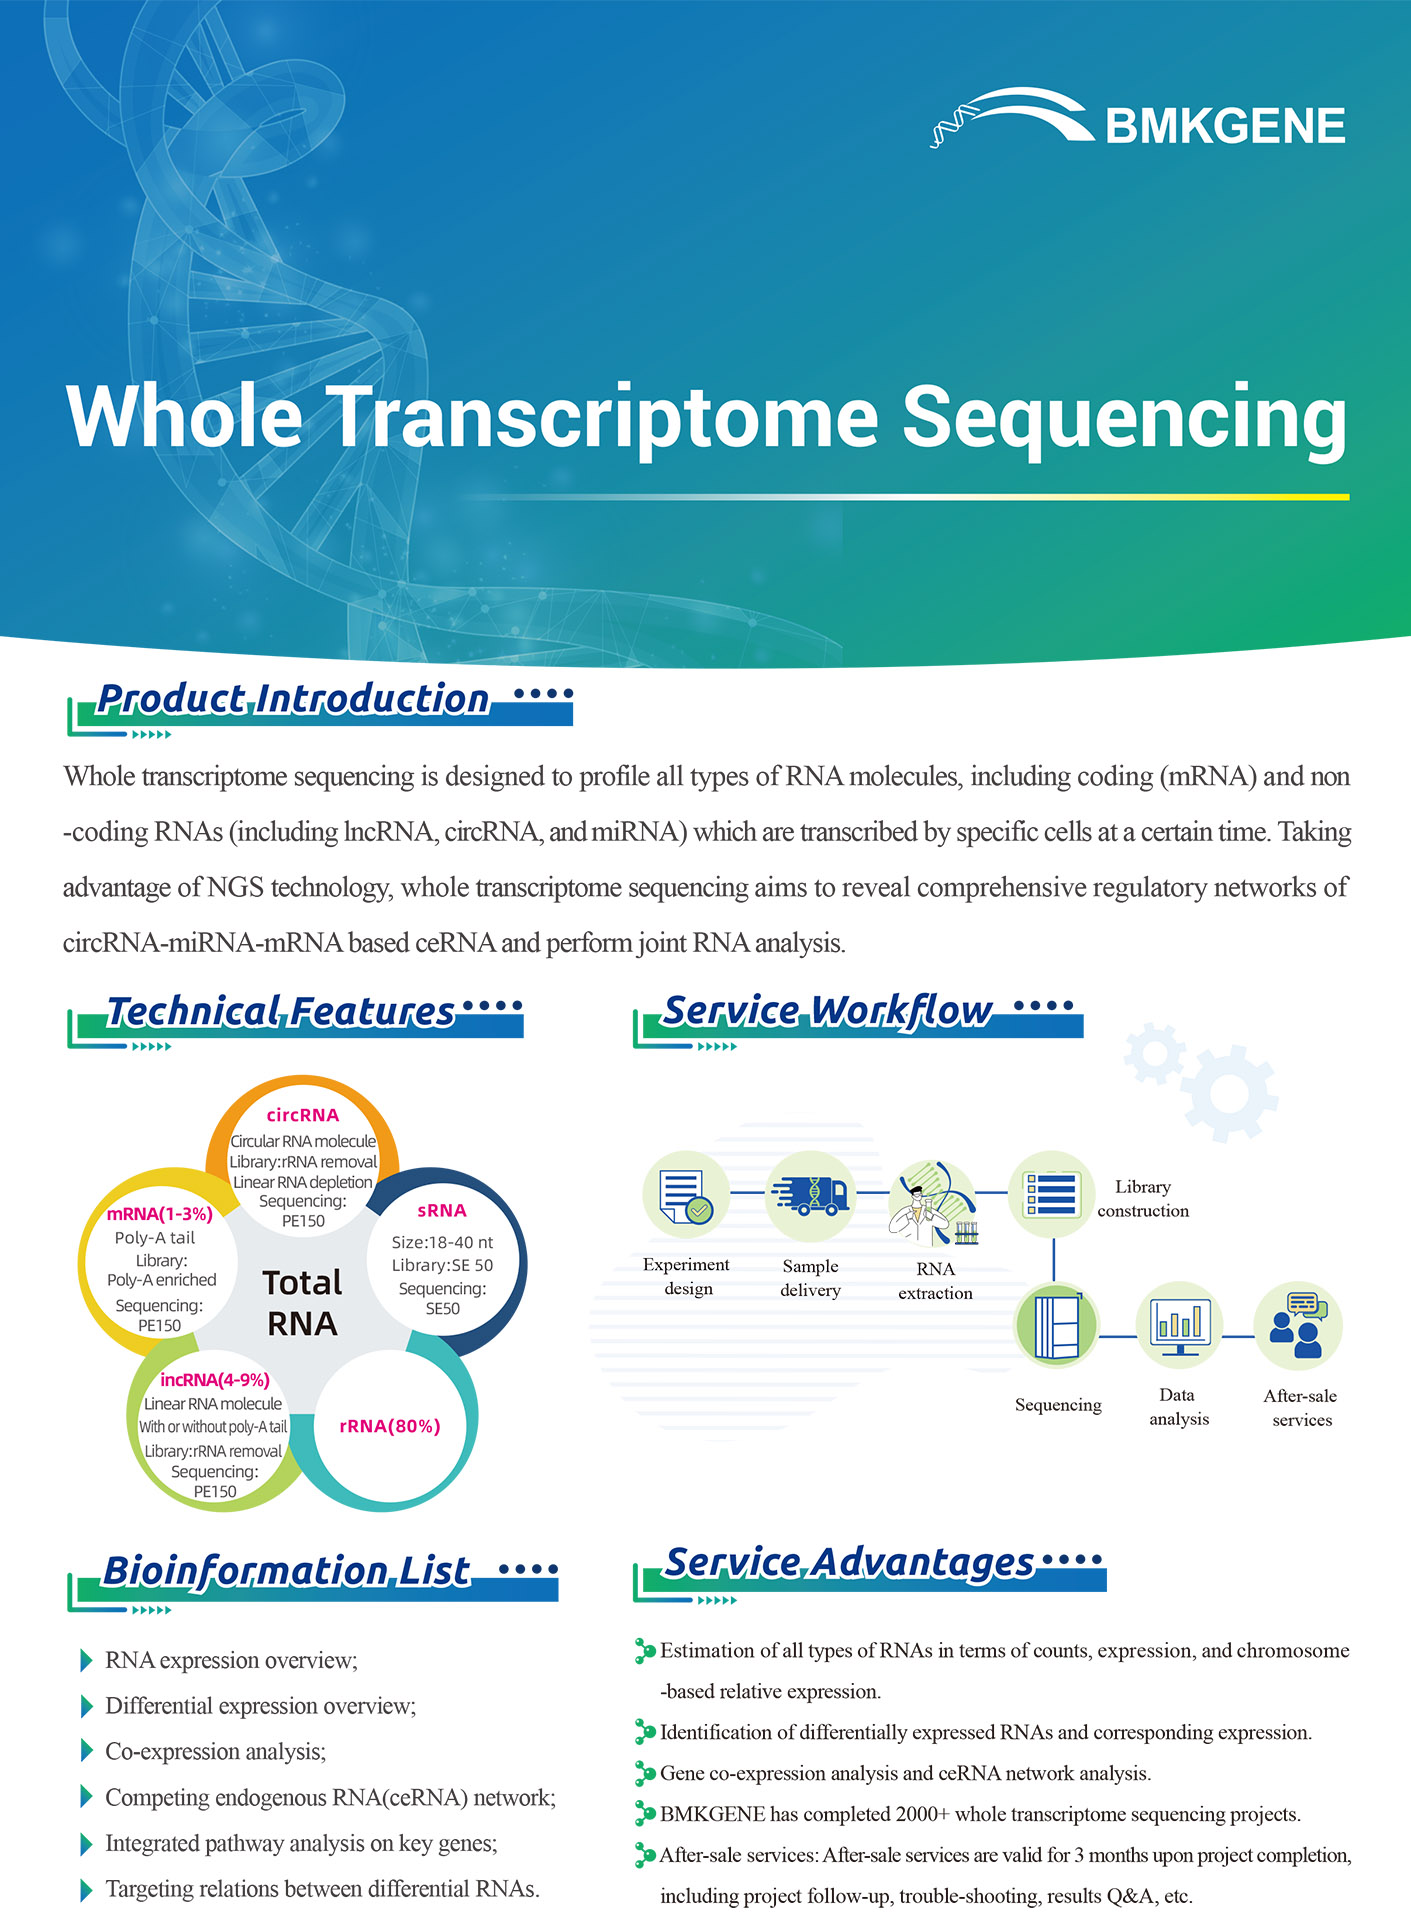 http://www.bmkgene.com/uploads/Whole-Transcriptome-Sequencing-BMKGENE-2023.123.pdf